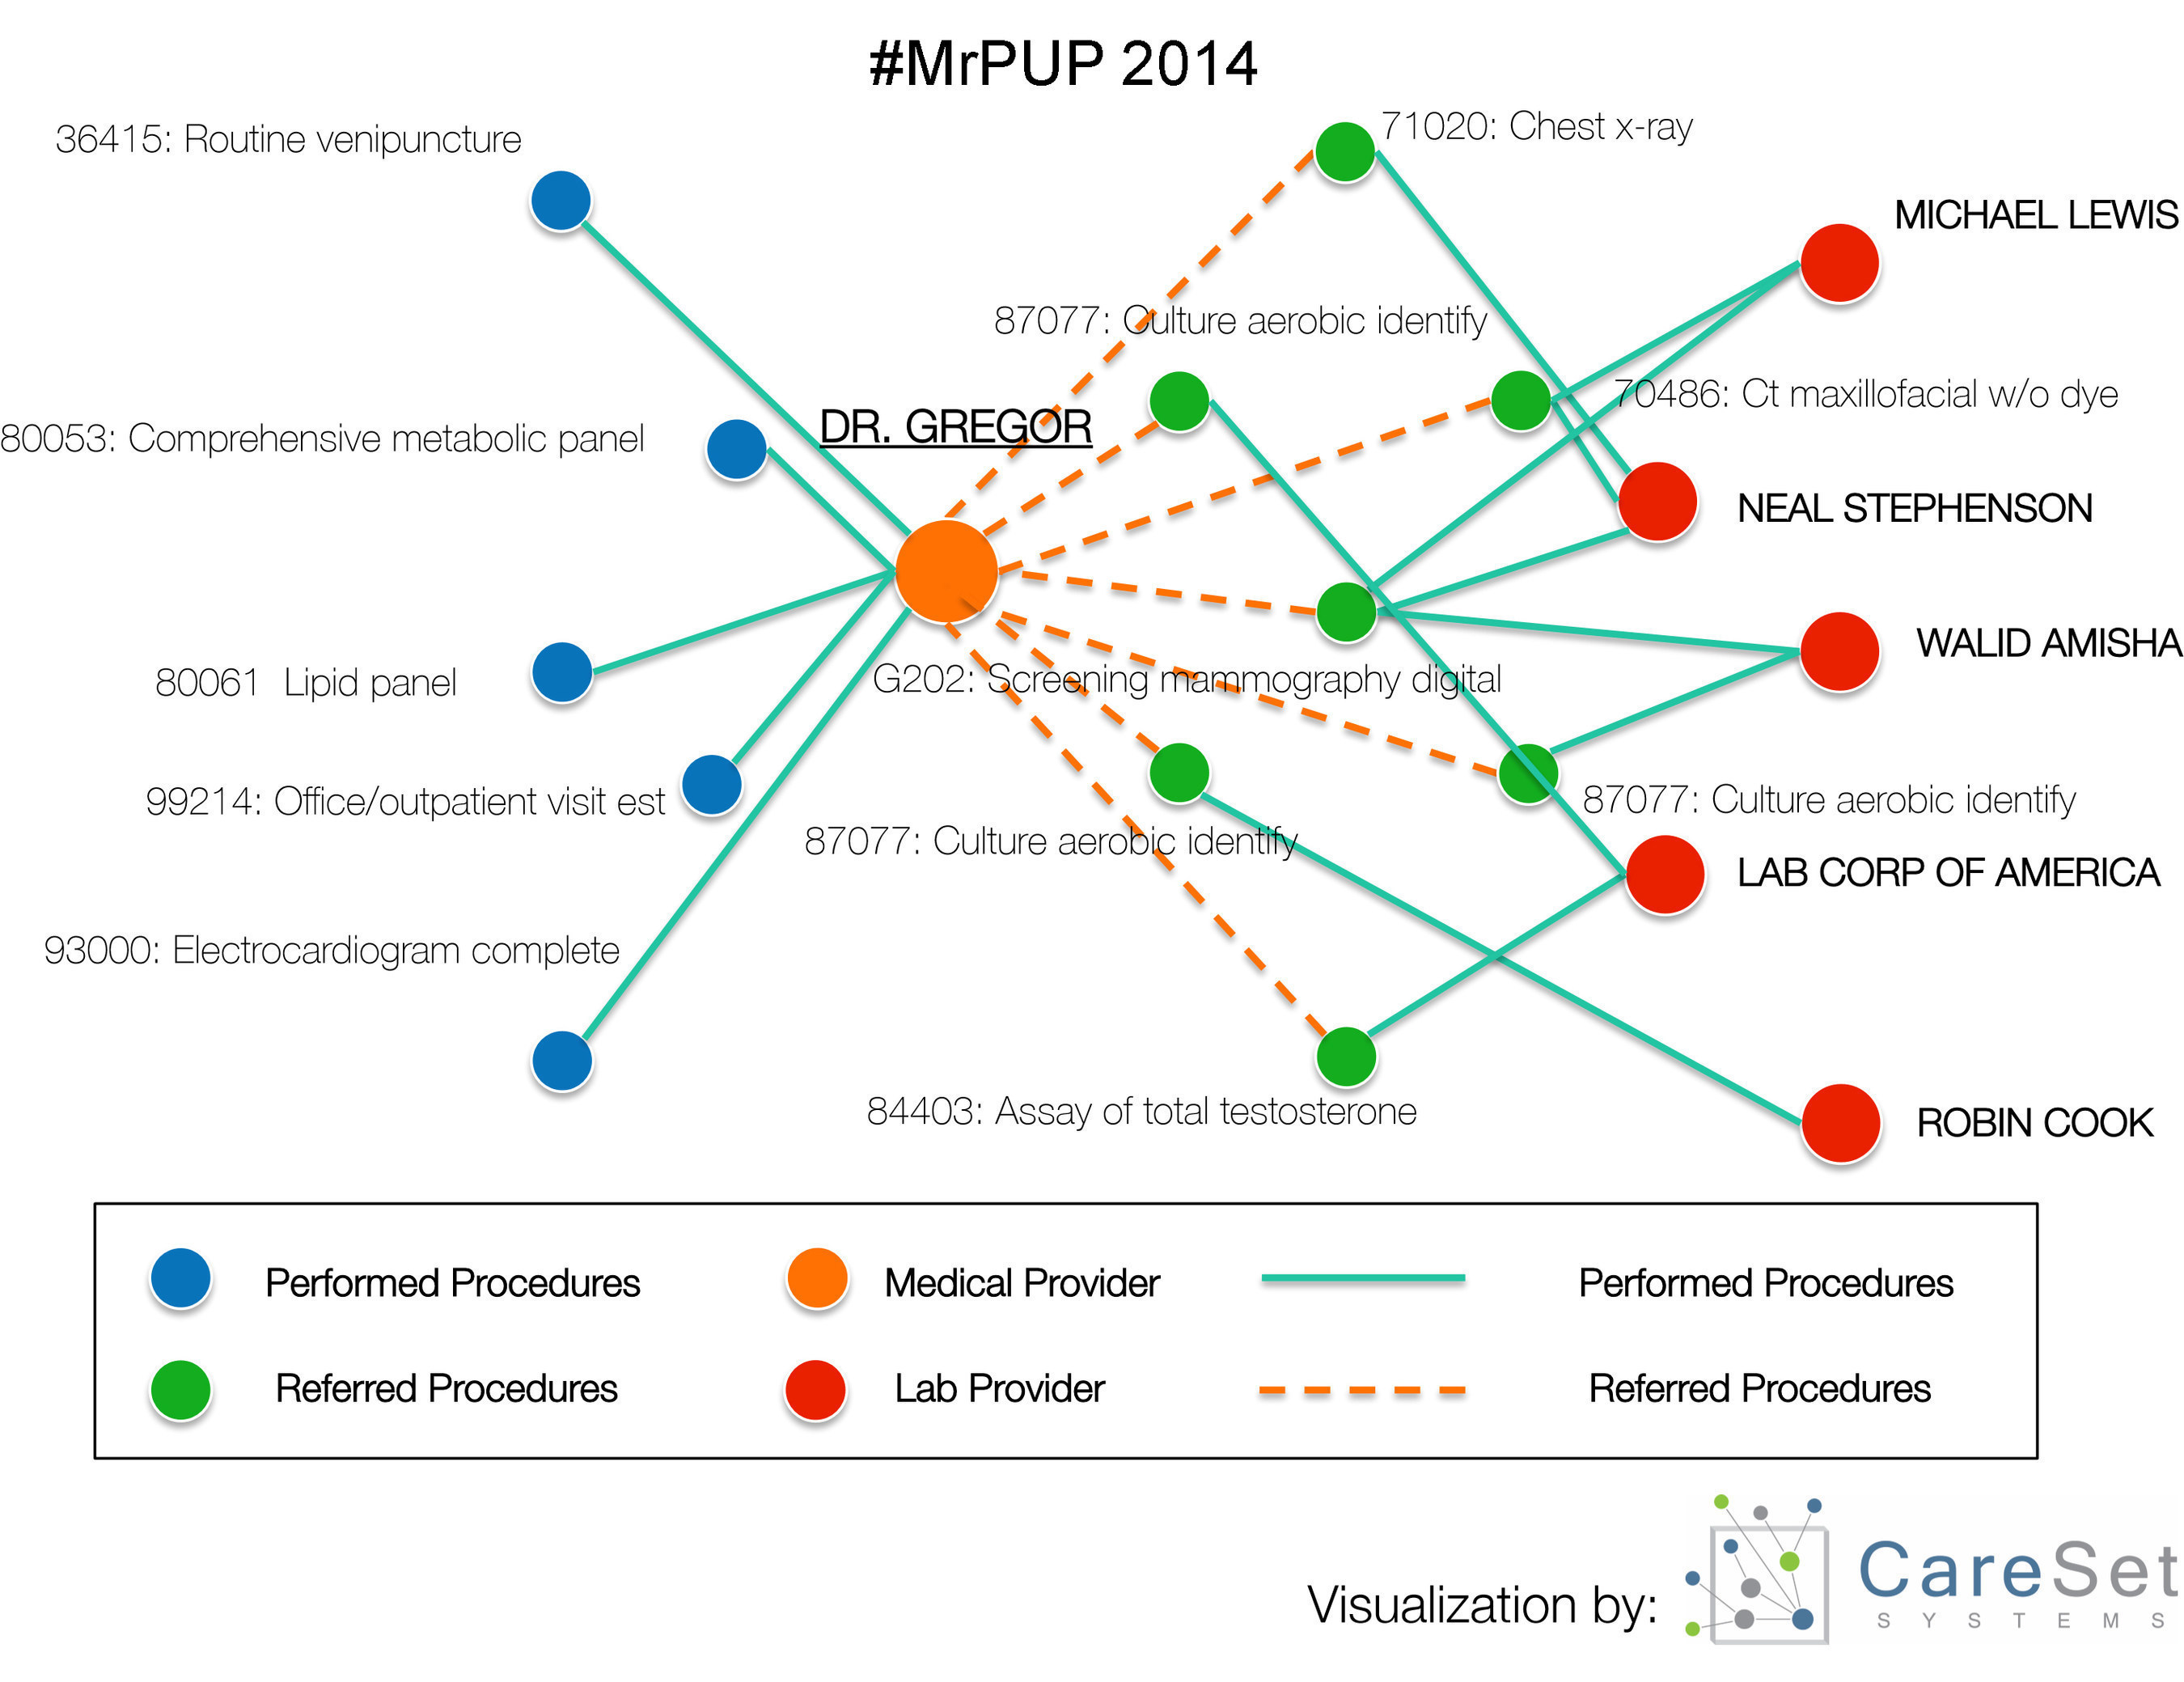 2014 Medicare Referring Provider Utilization for Procedures (MrPUP) Dataset